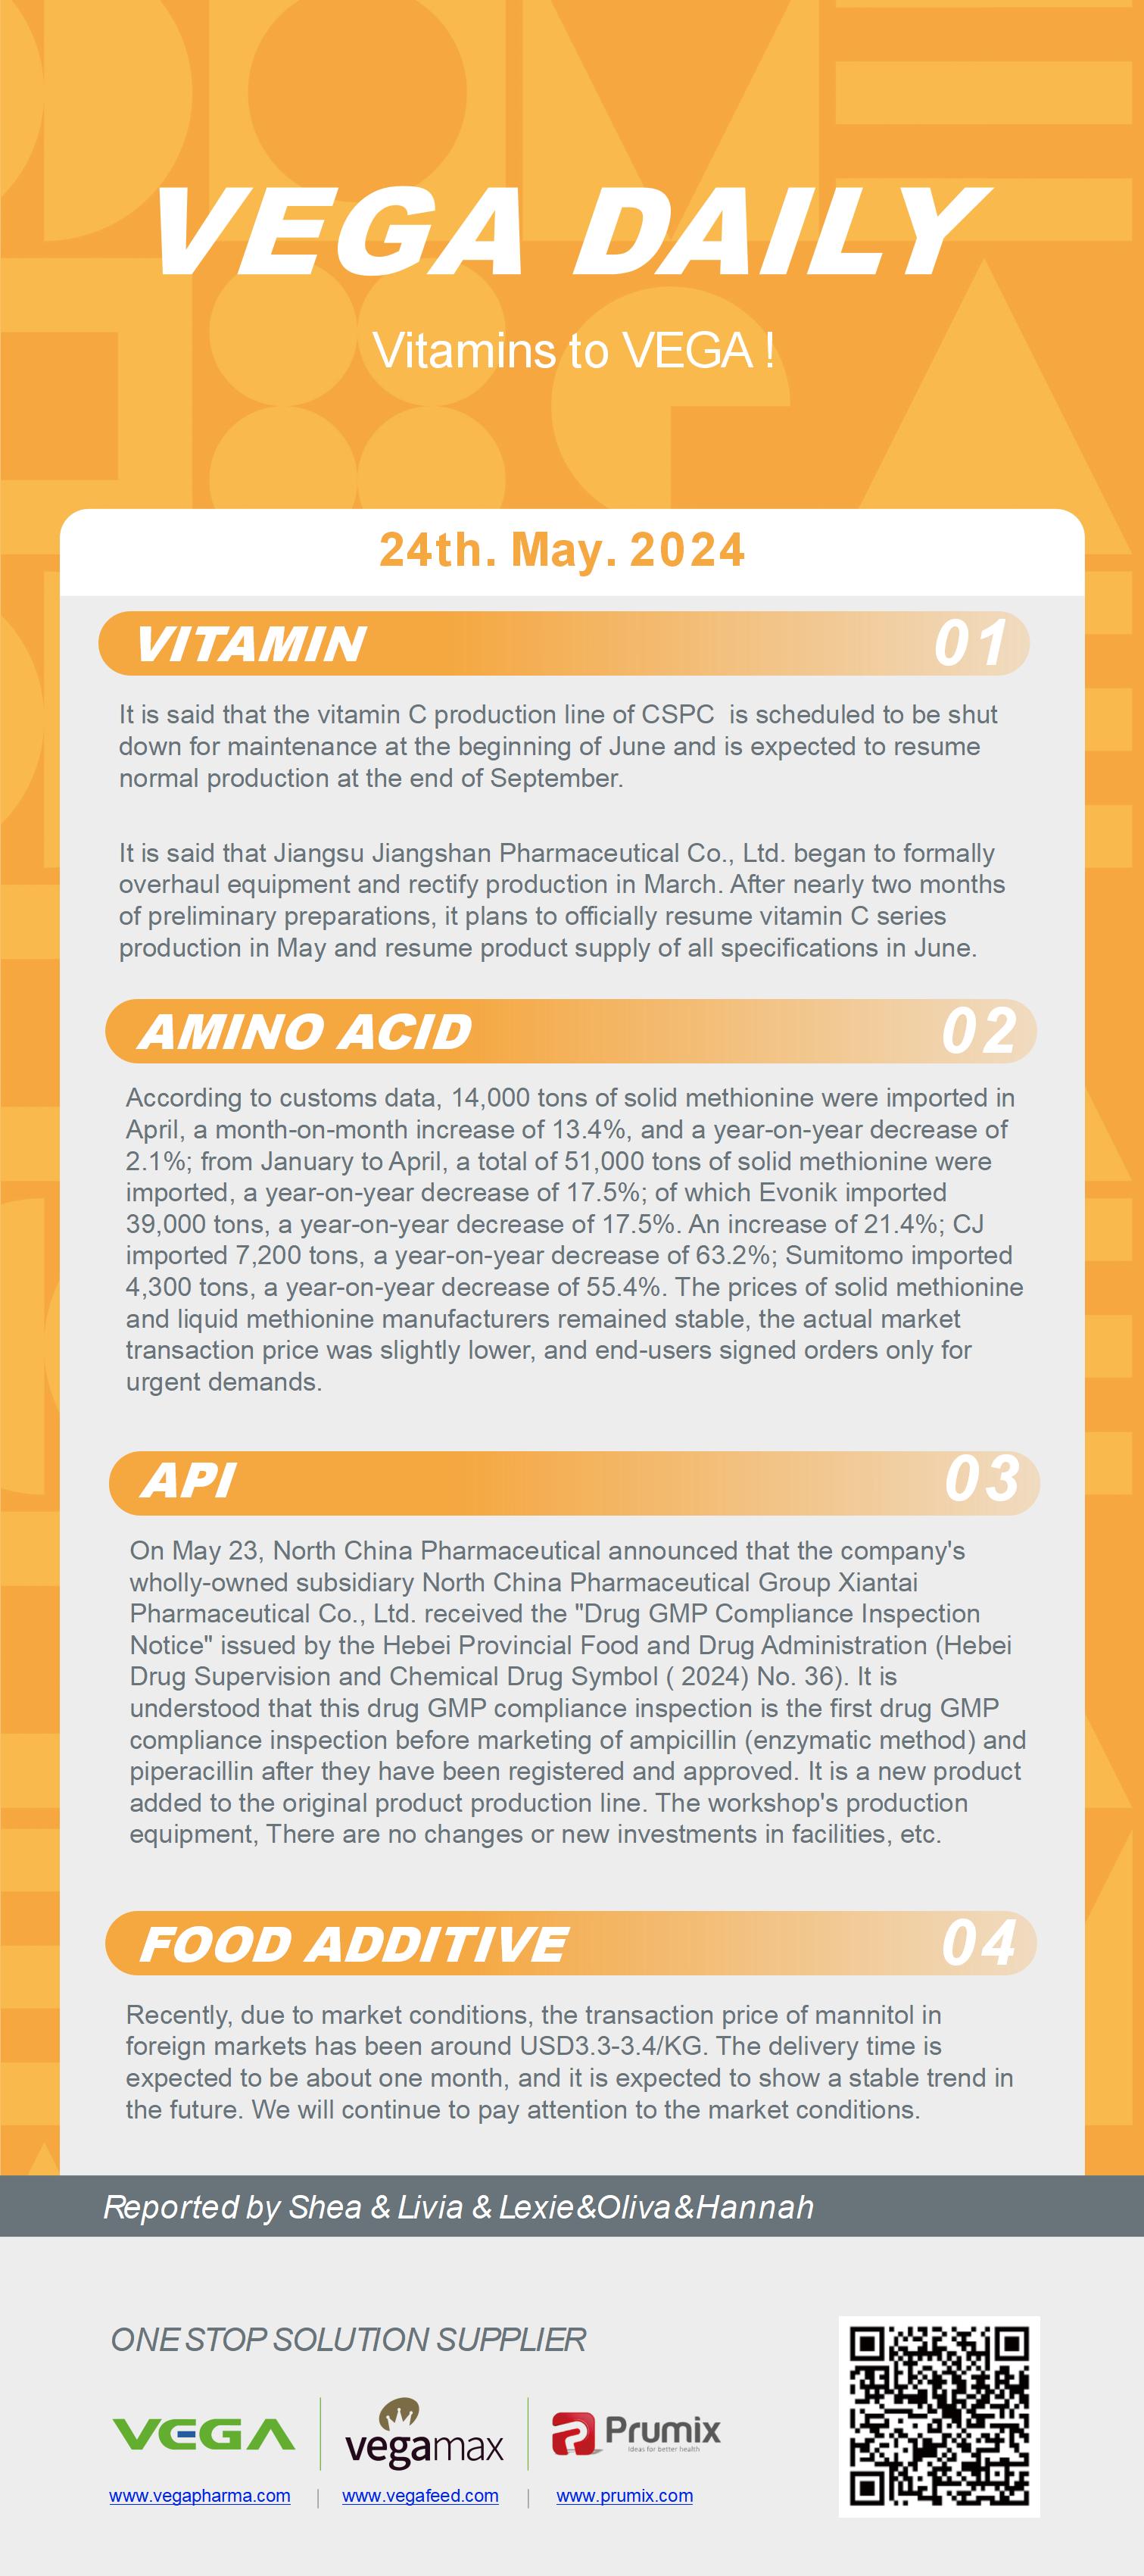 Vega Daily Dated on May 24th 2024 Vitamin Amino Acid APl Food Additives.jpg